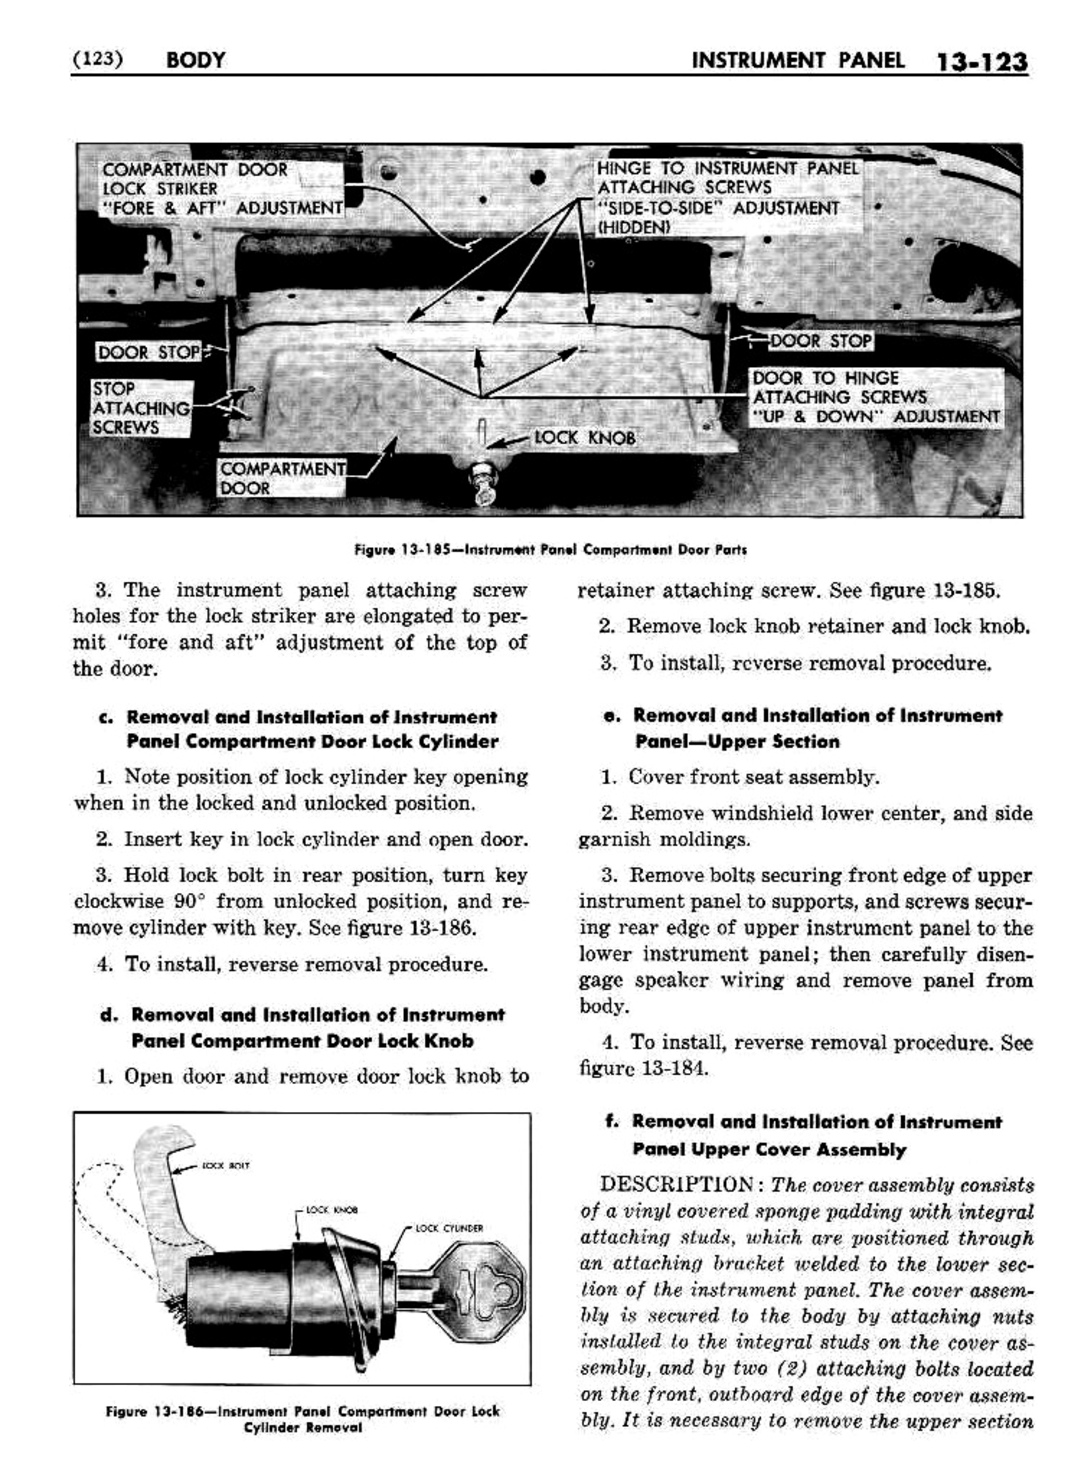 n_1958 Buick Body Service Manual-124-124.jpg